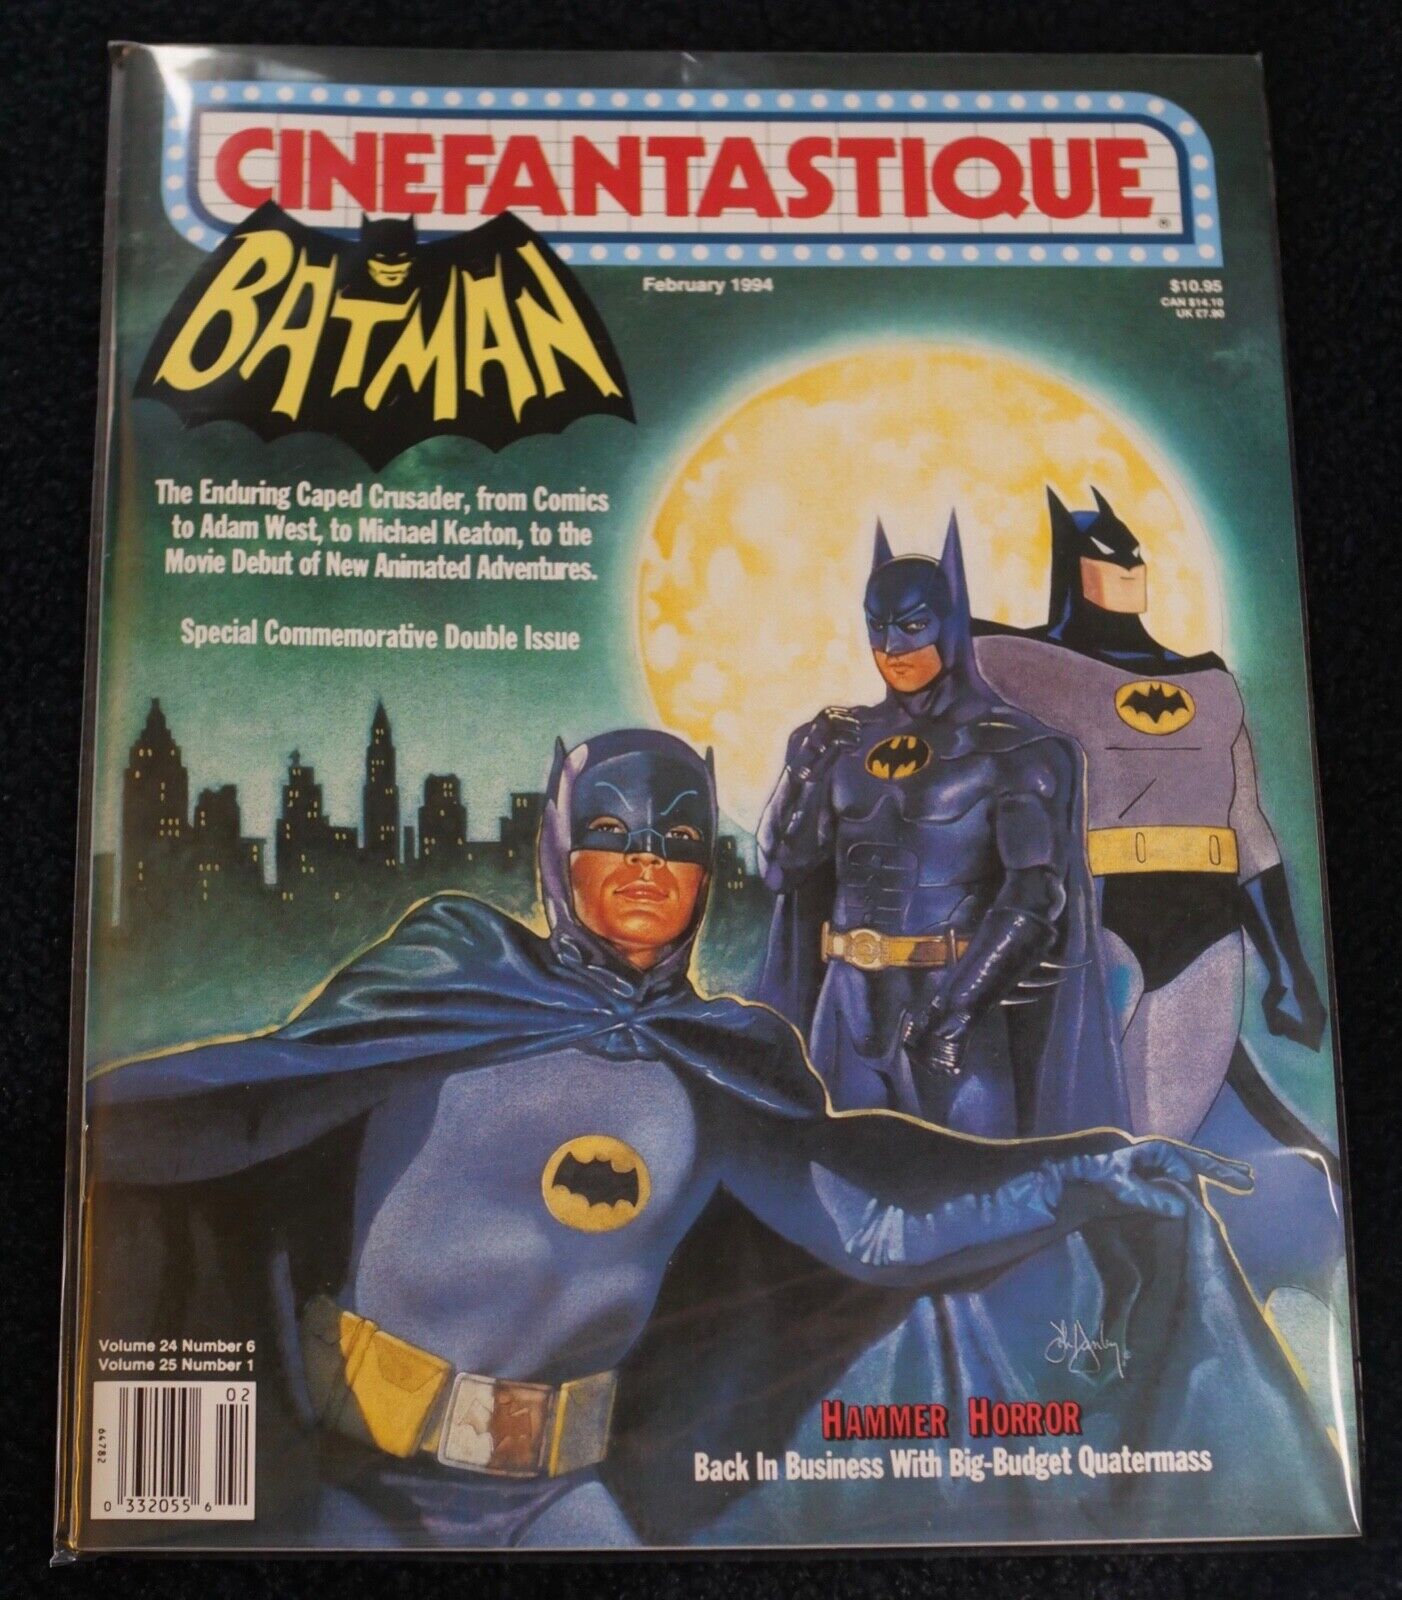 Cinefantastique Magazine - February 1994 / Batman Special Double Issue - NEW